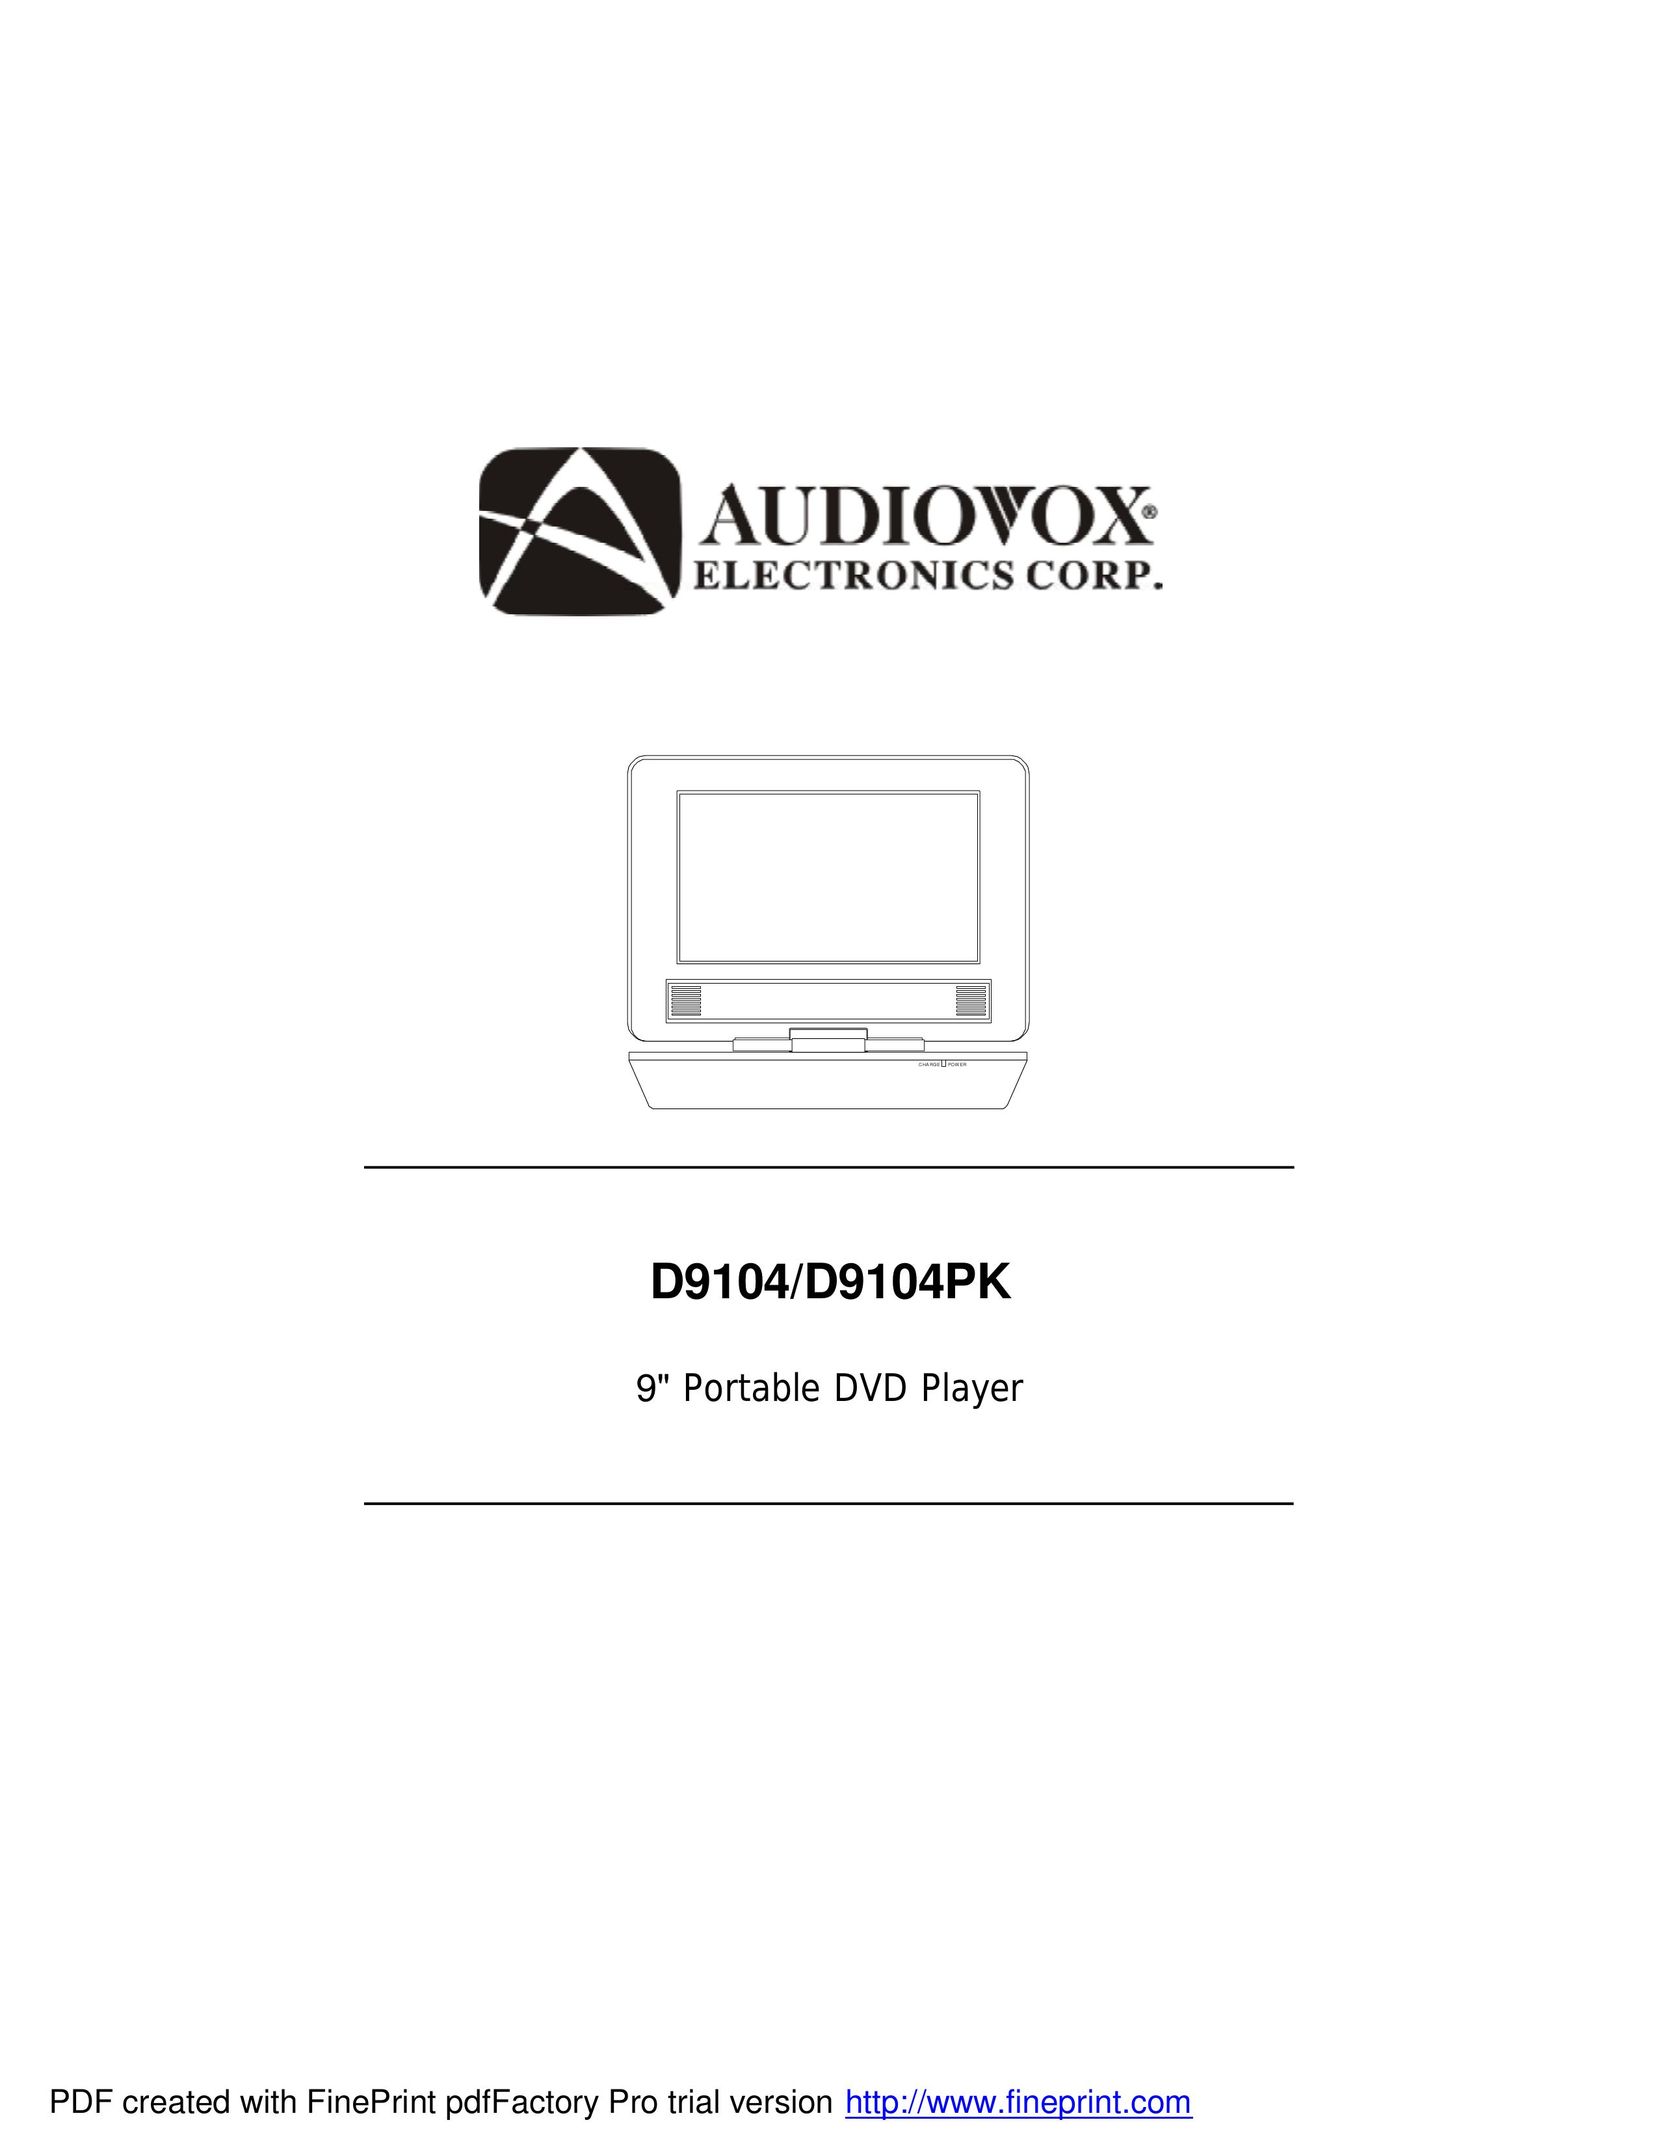 Audiovox D9104PK Portable DVD Player User Manual